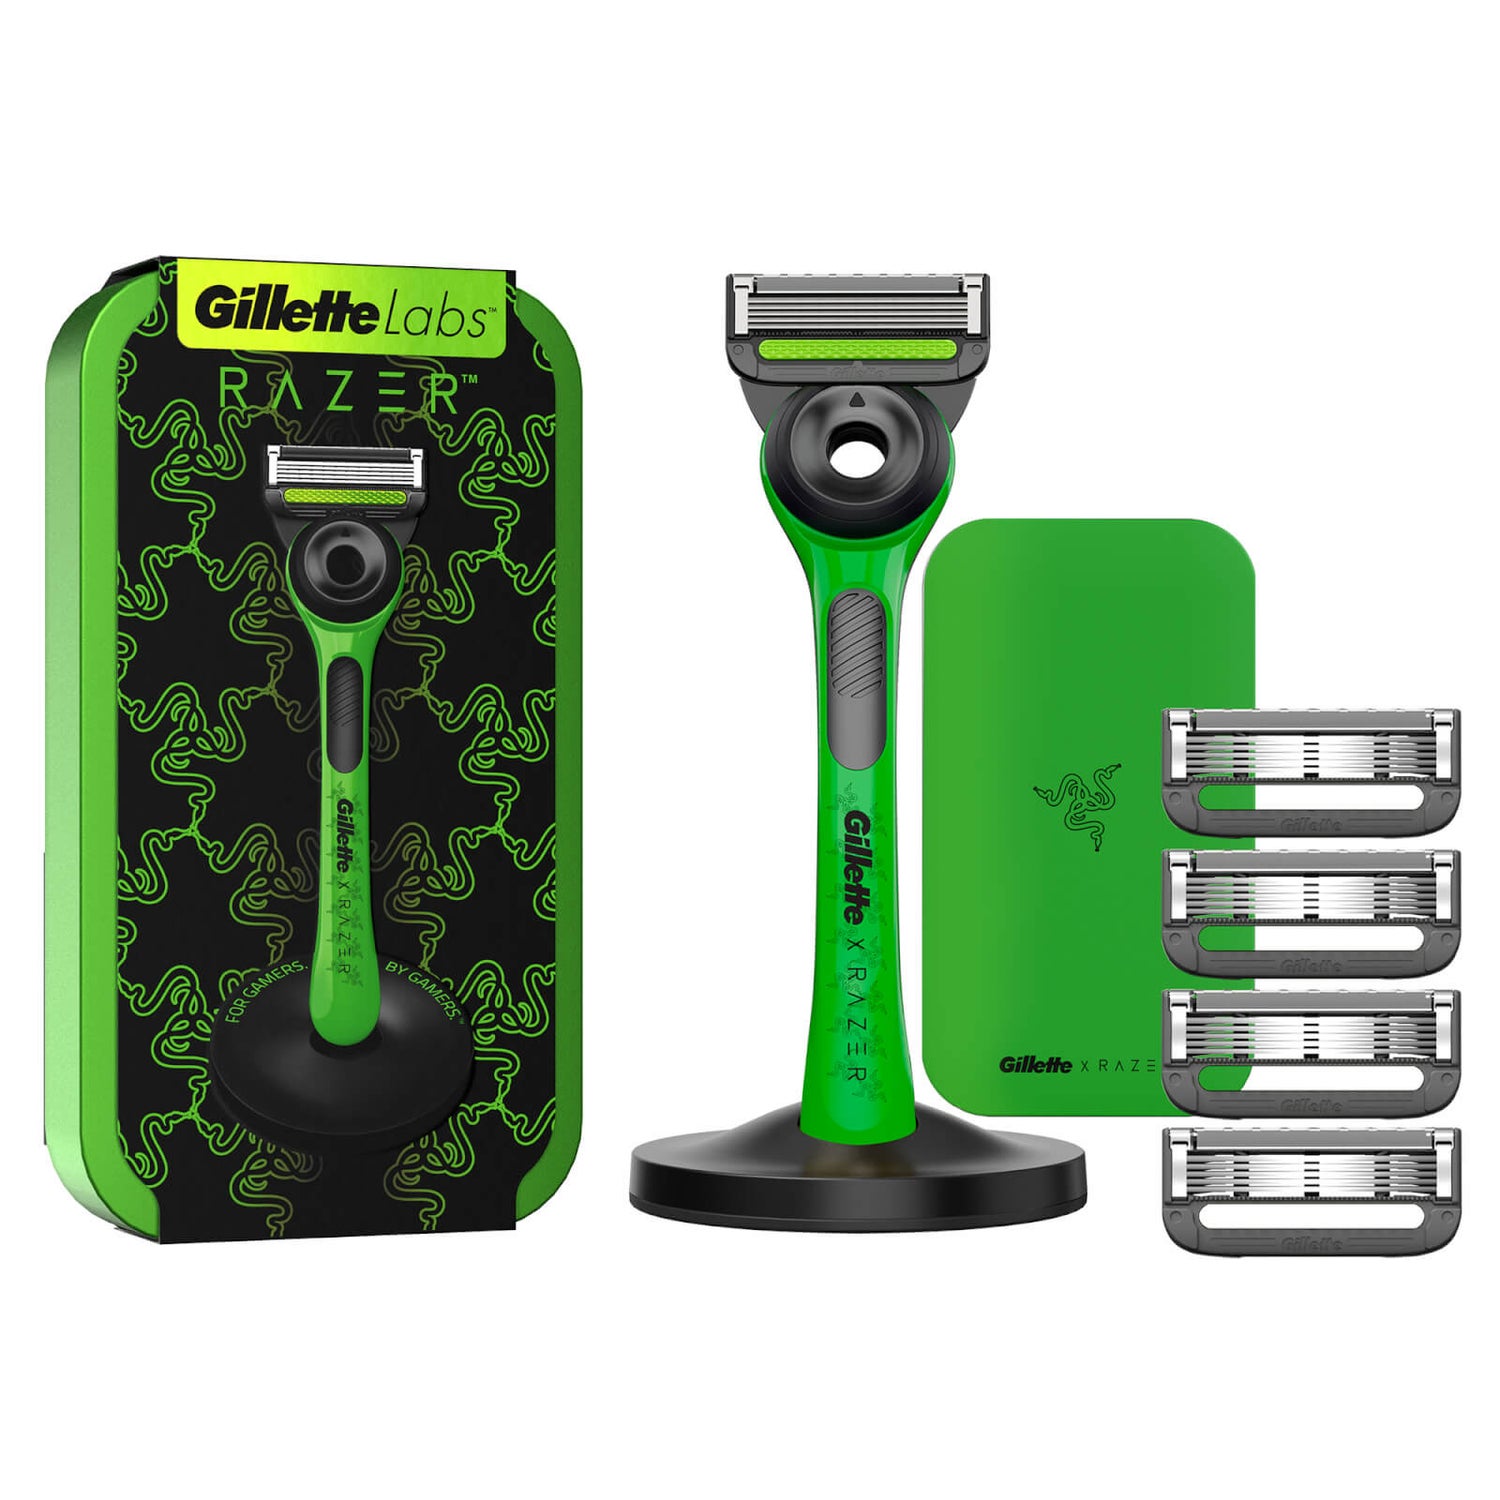 Gillette Labs Razer Razor Limited Edition – With Travel Case & 4 Blade Refills